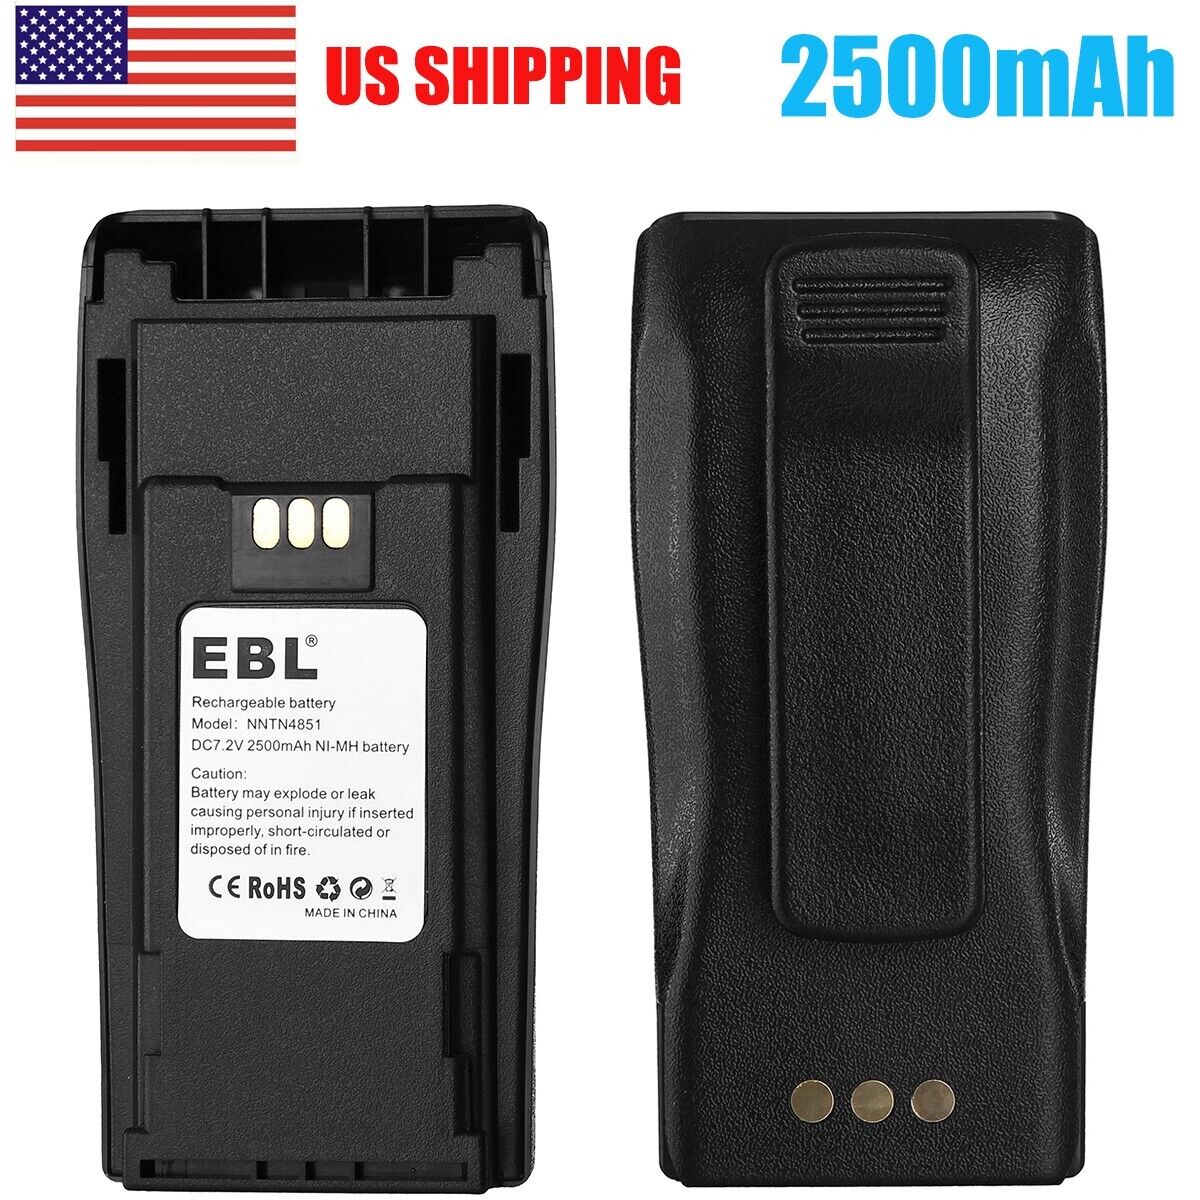 EBL NNTN4497 Battery for Motorola 4970 CP150 CP180 CP200D PR400 EP450 2500mAh